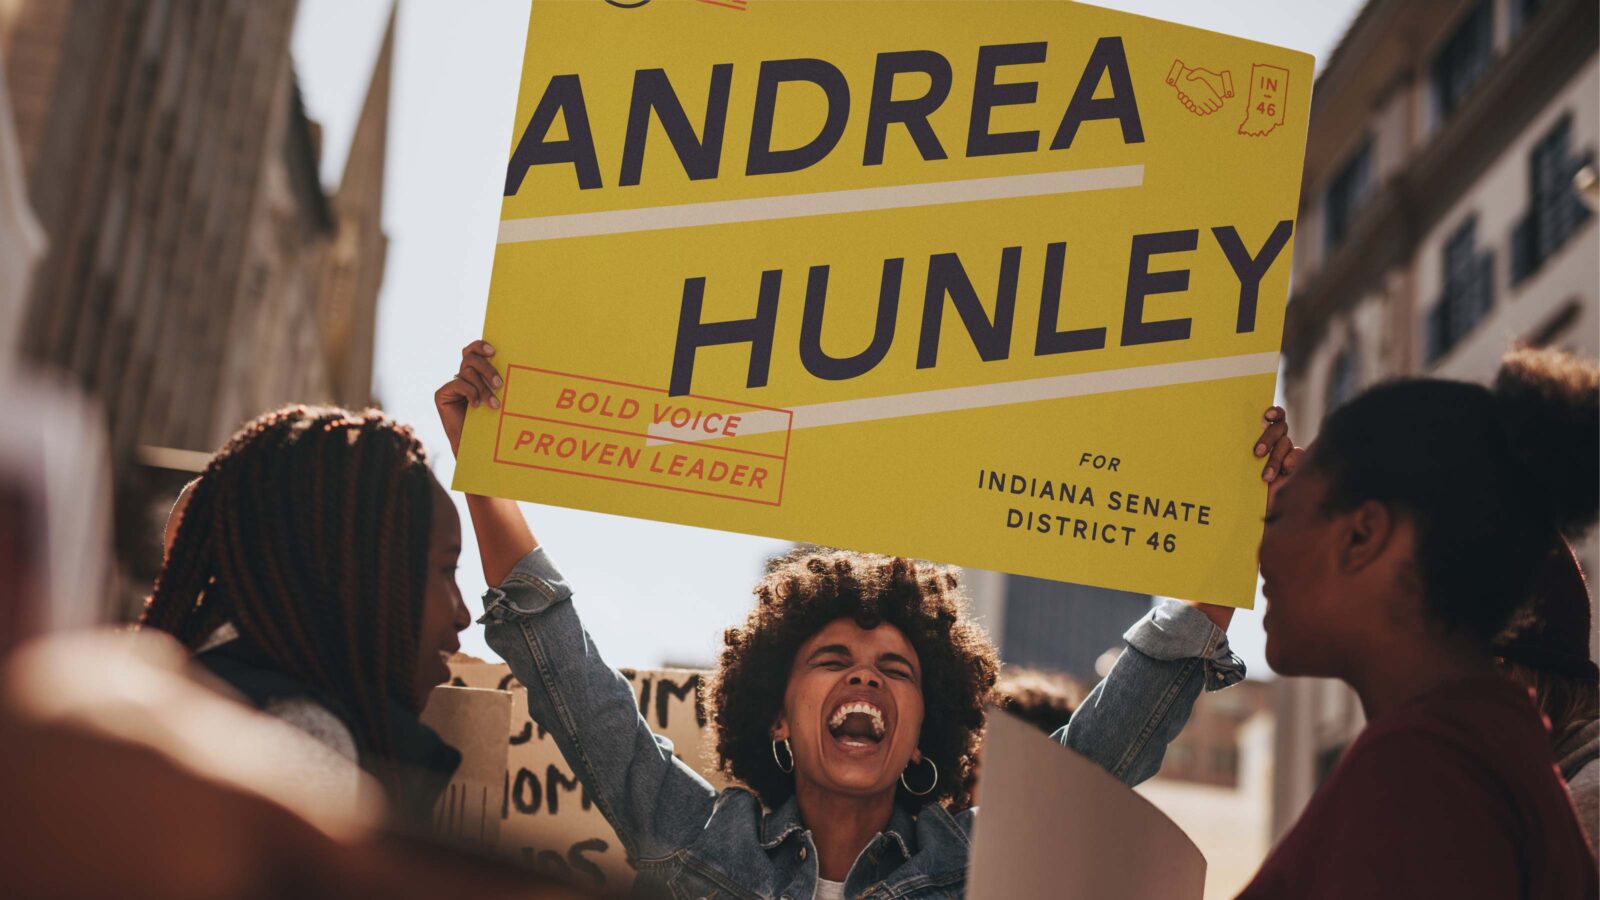 Andrea Hunley campaign branding